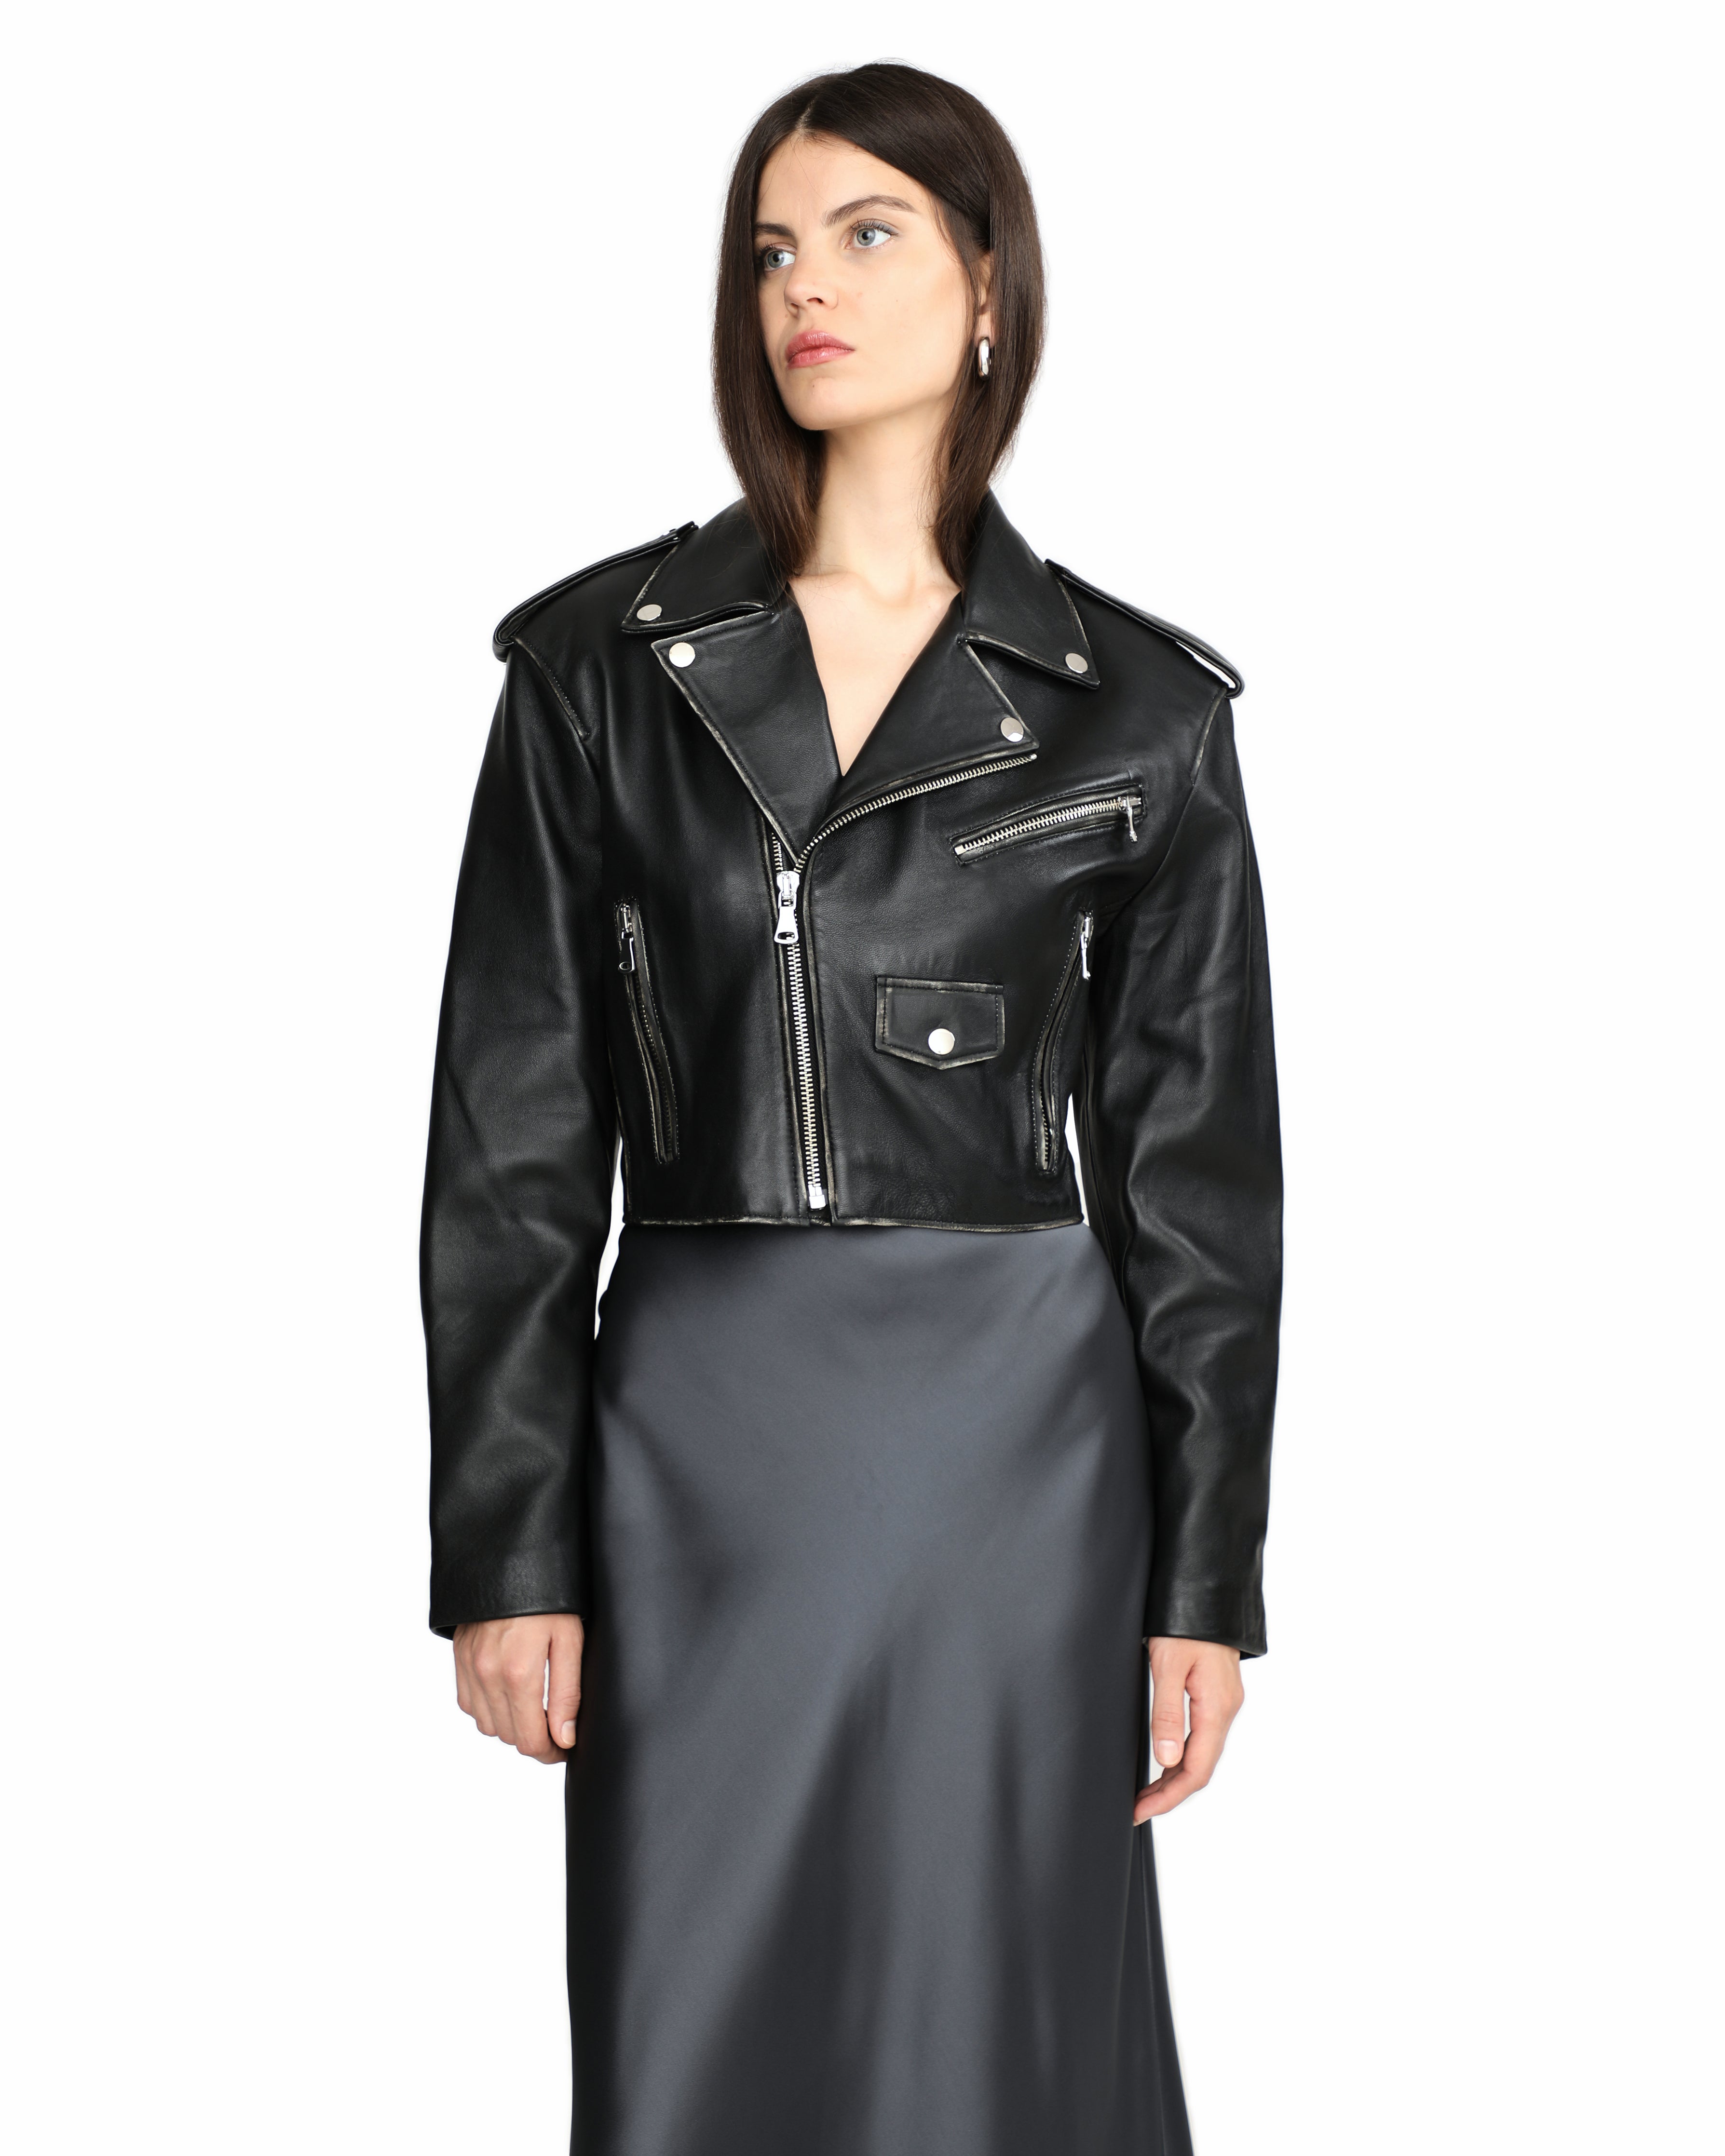 Amanda short black leather jacket with zipper and pockets 